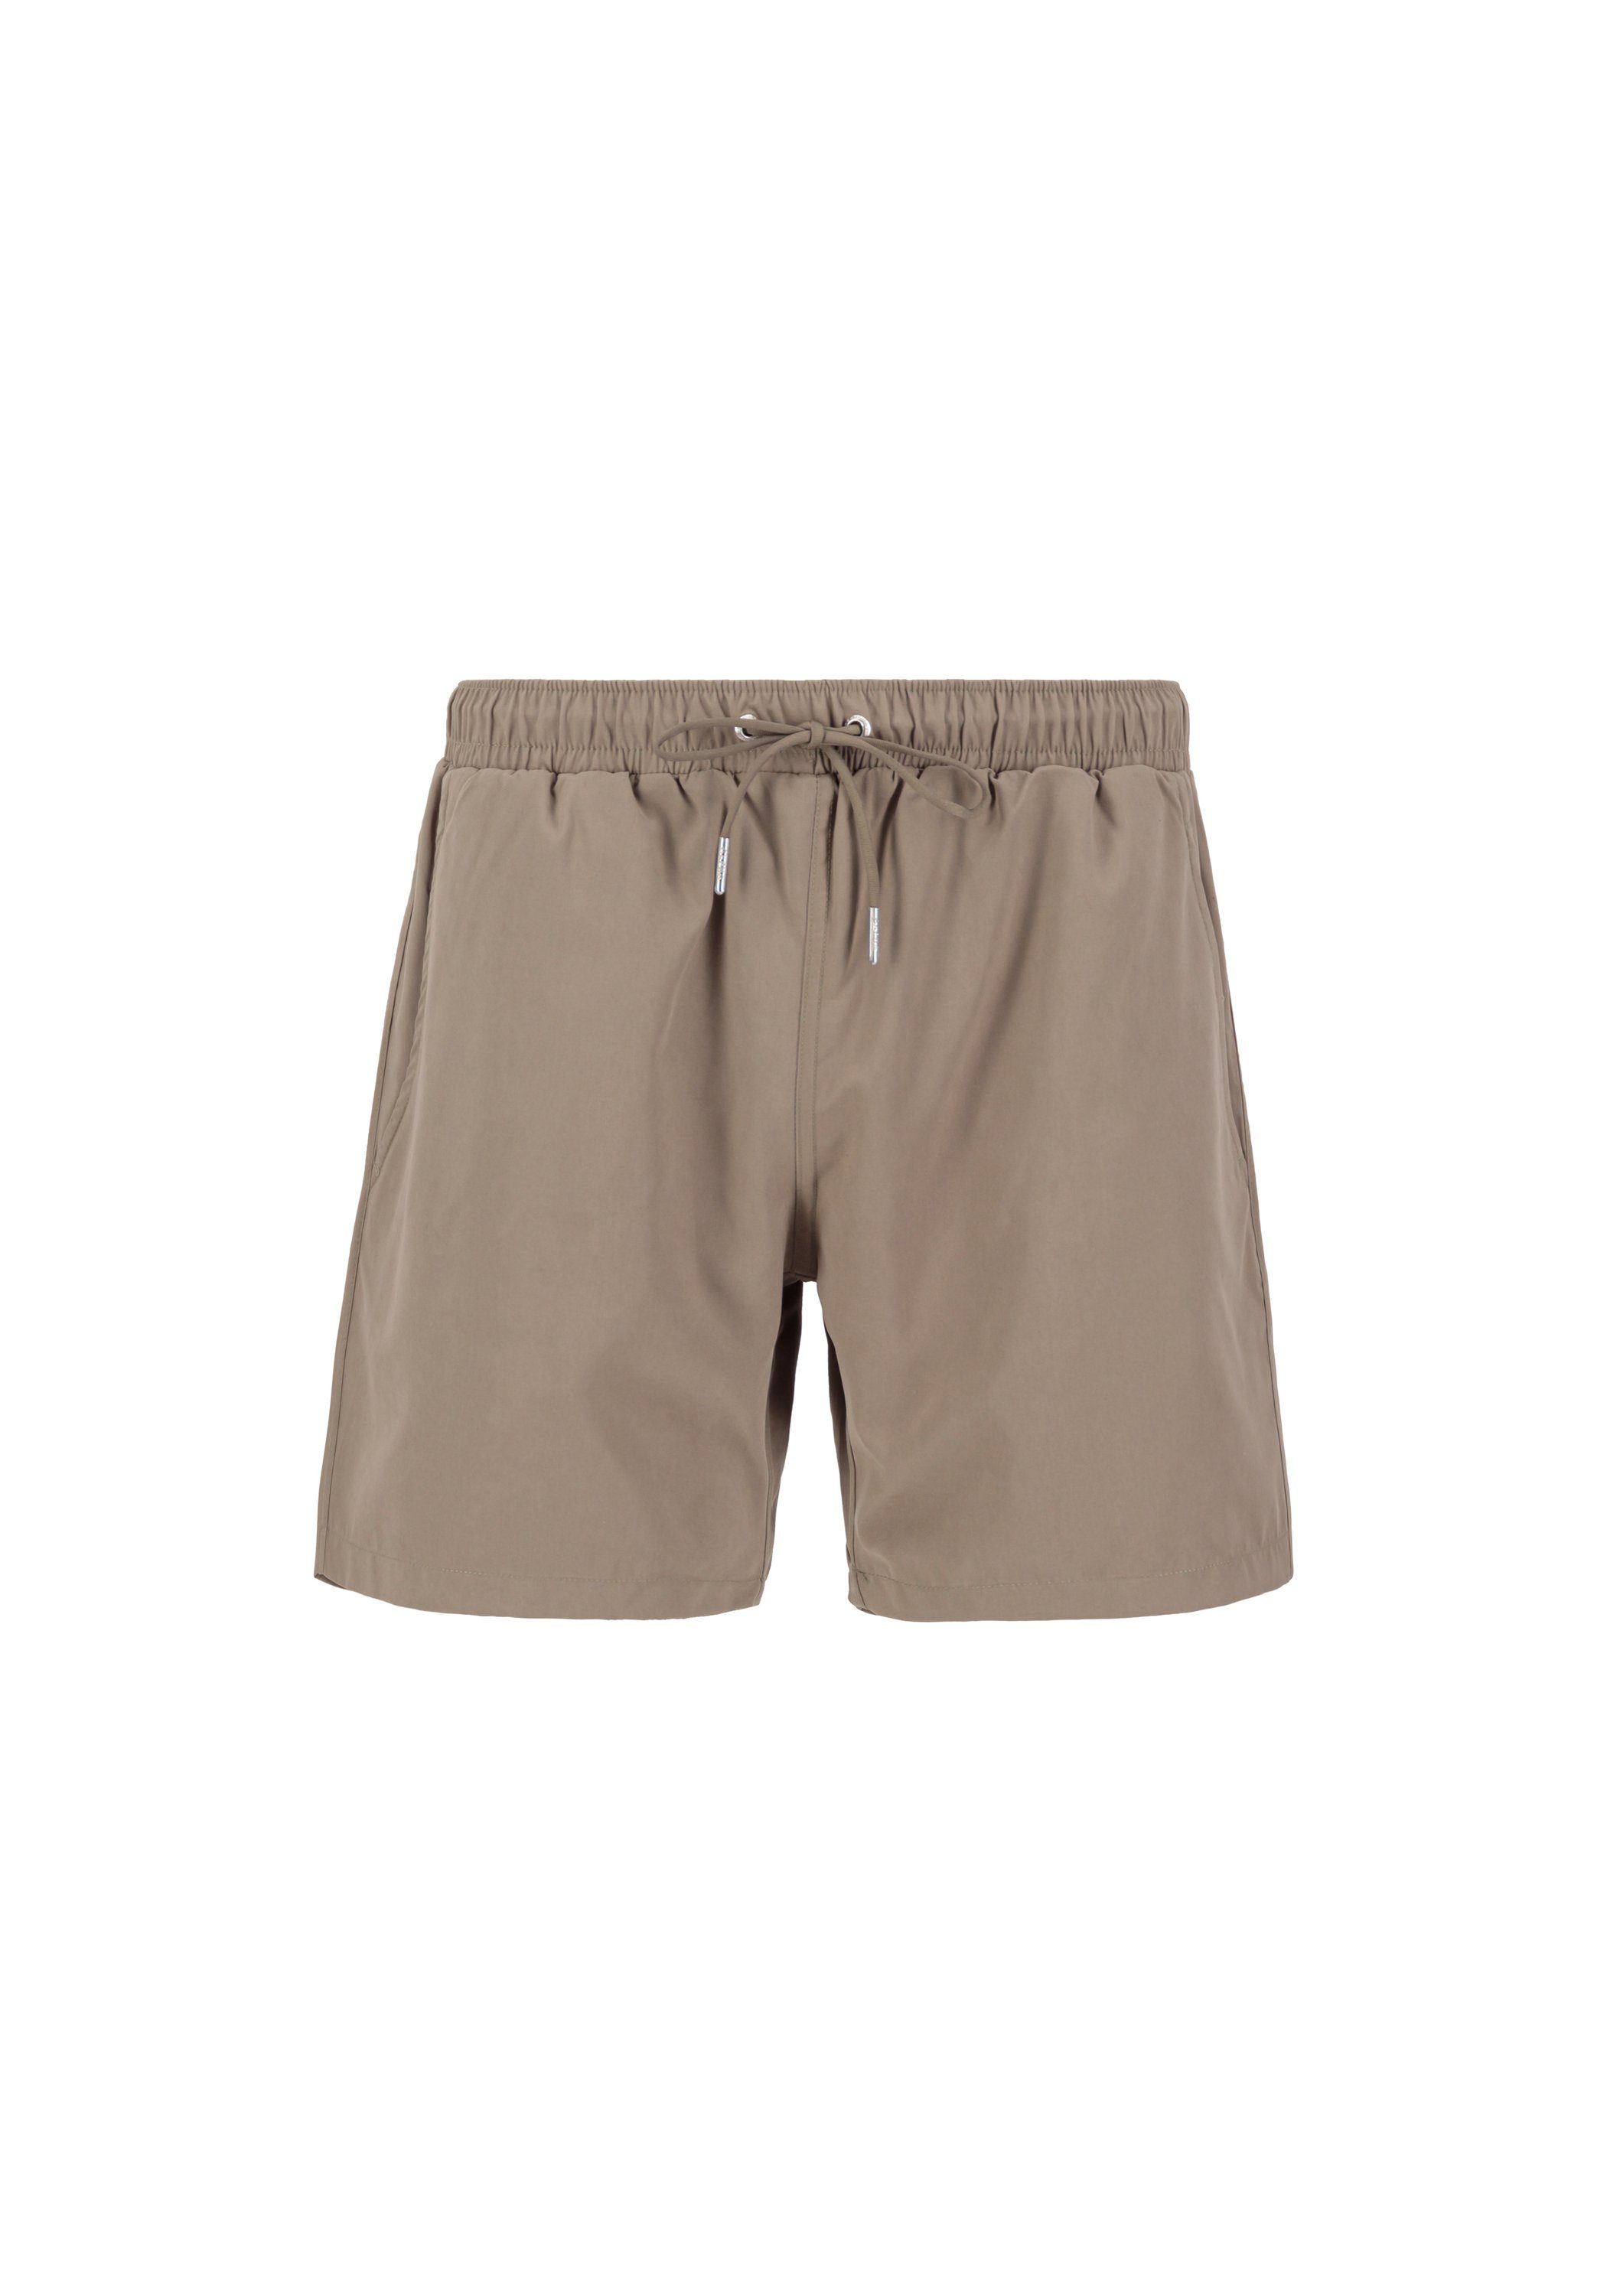 Shorts olive Alpha Alpha Swimshort Beachwear Industries - Hydrochromic Men Industries AOP